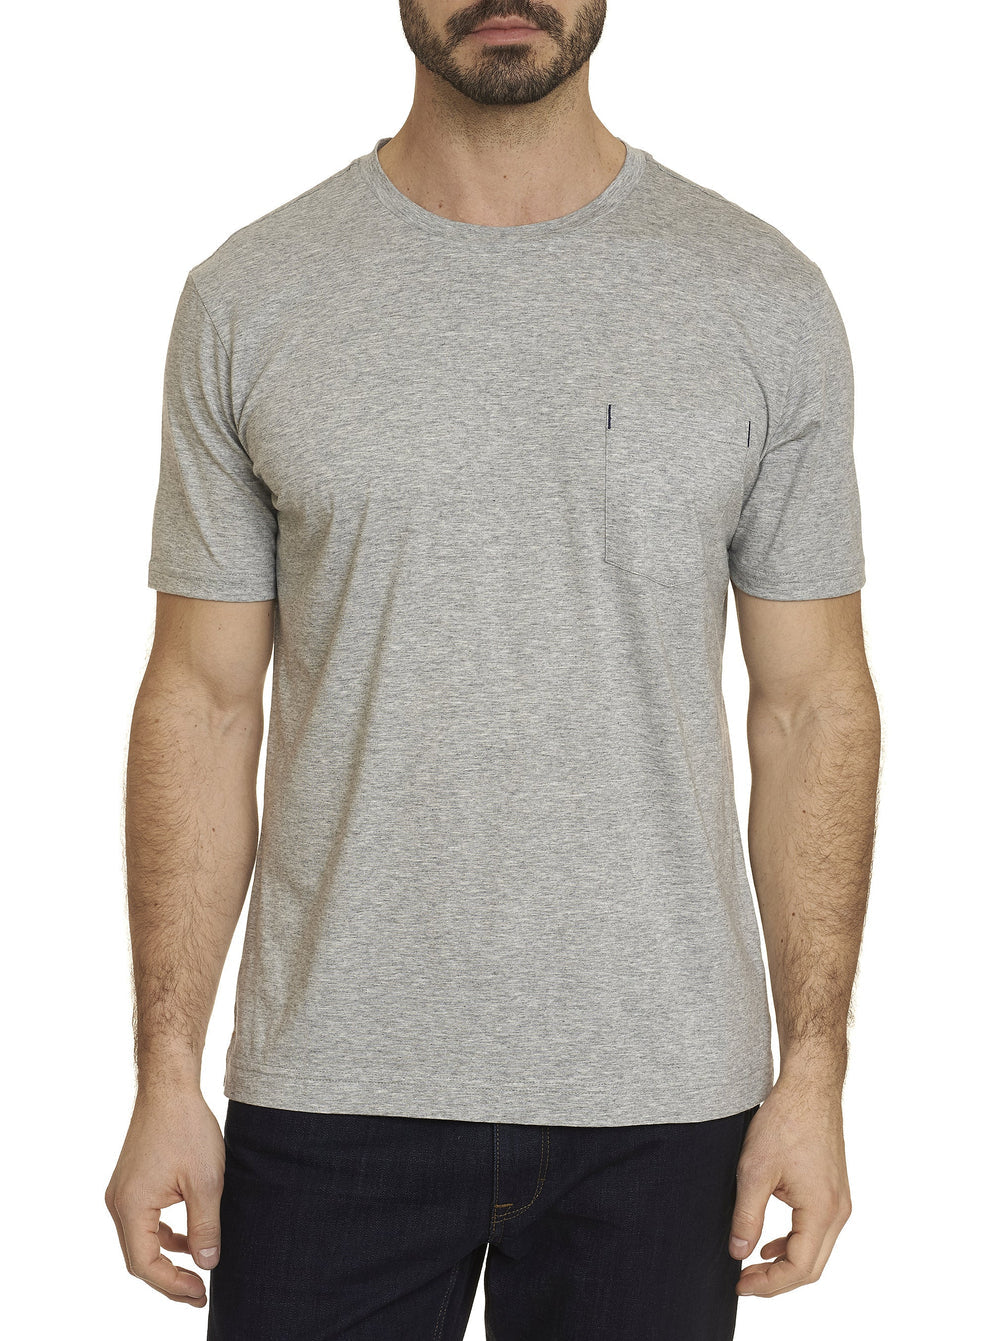 Robert Graham Myles S/S Knit T-Shirt (9 Colors) $24.99 + Free Shipping